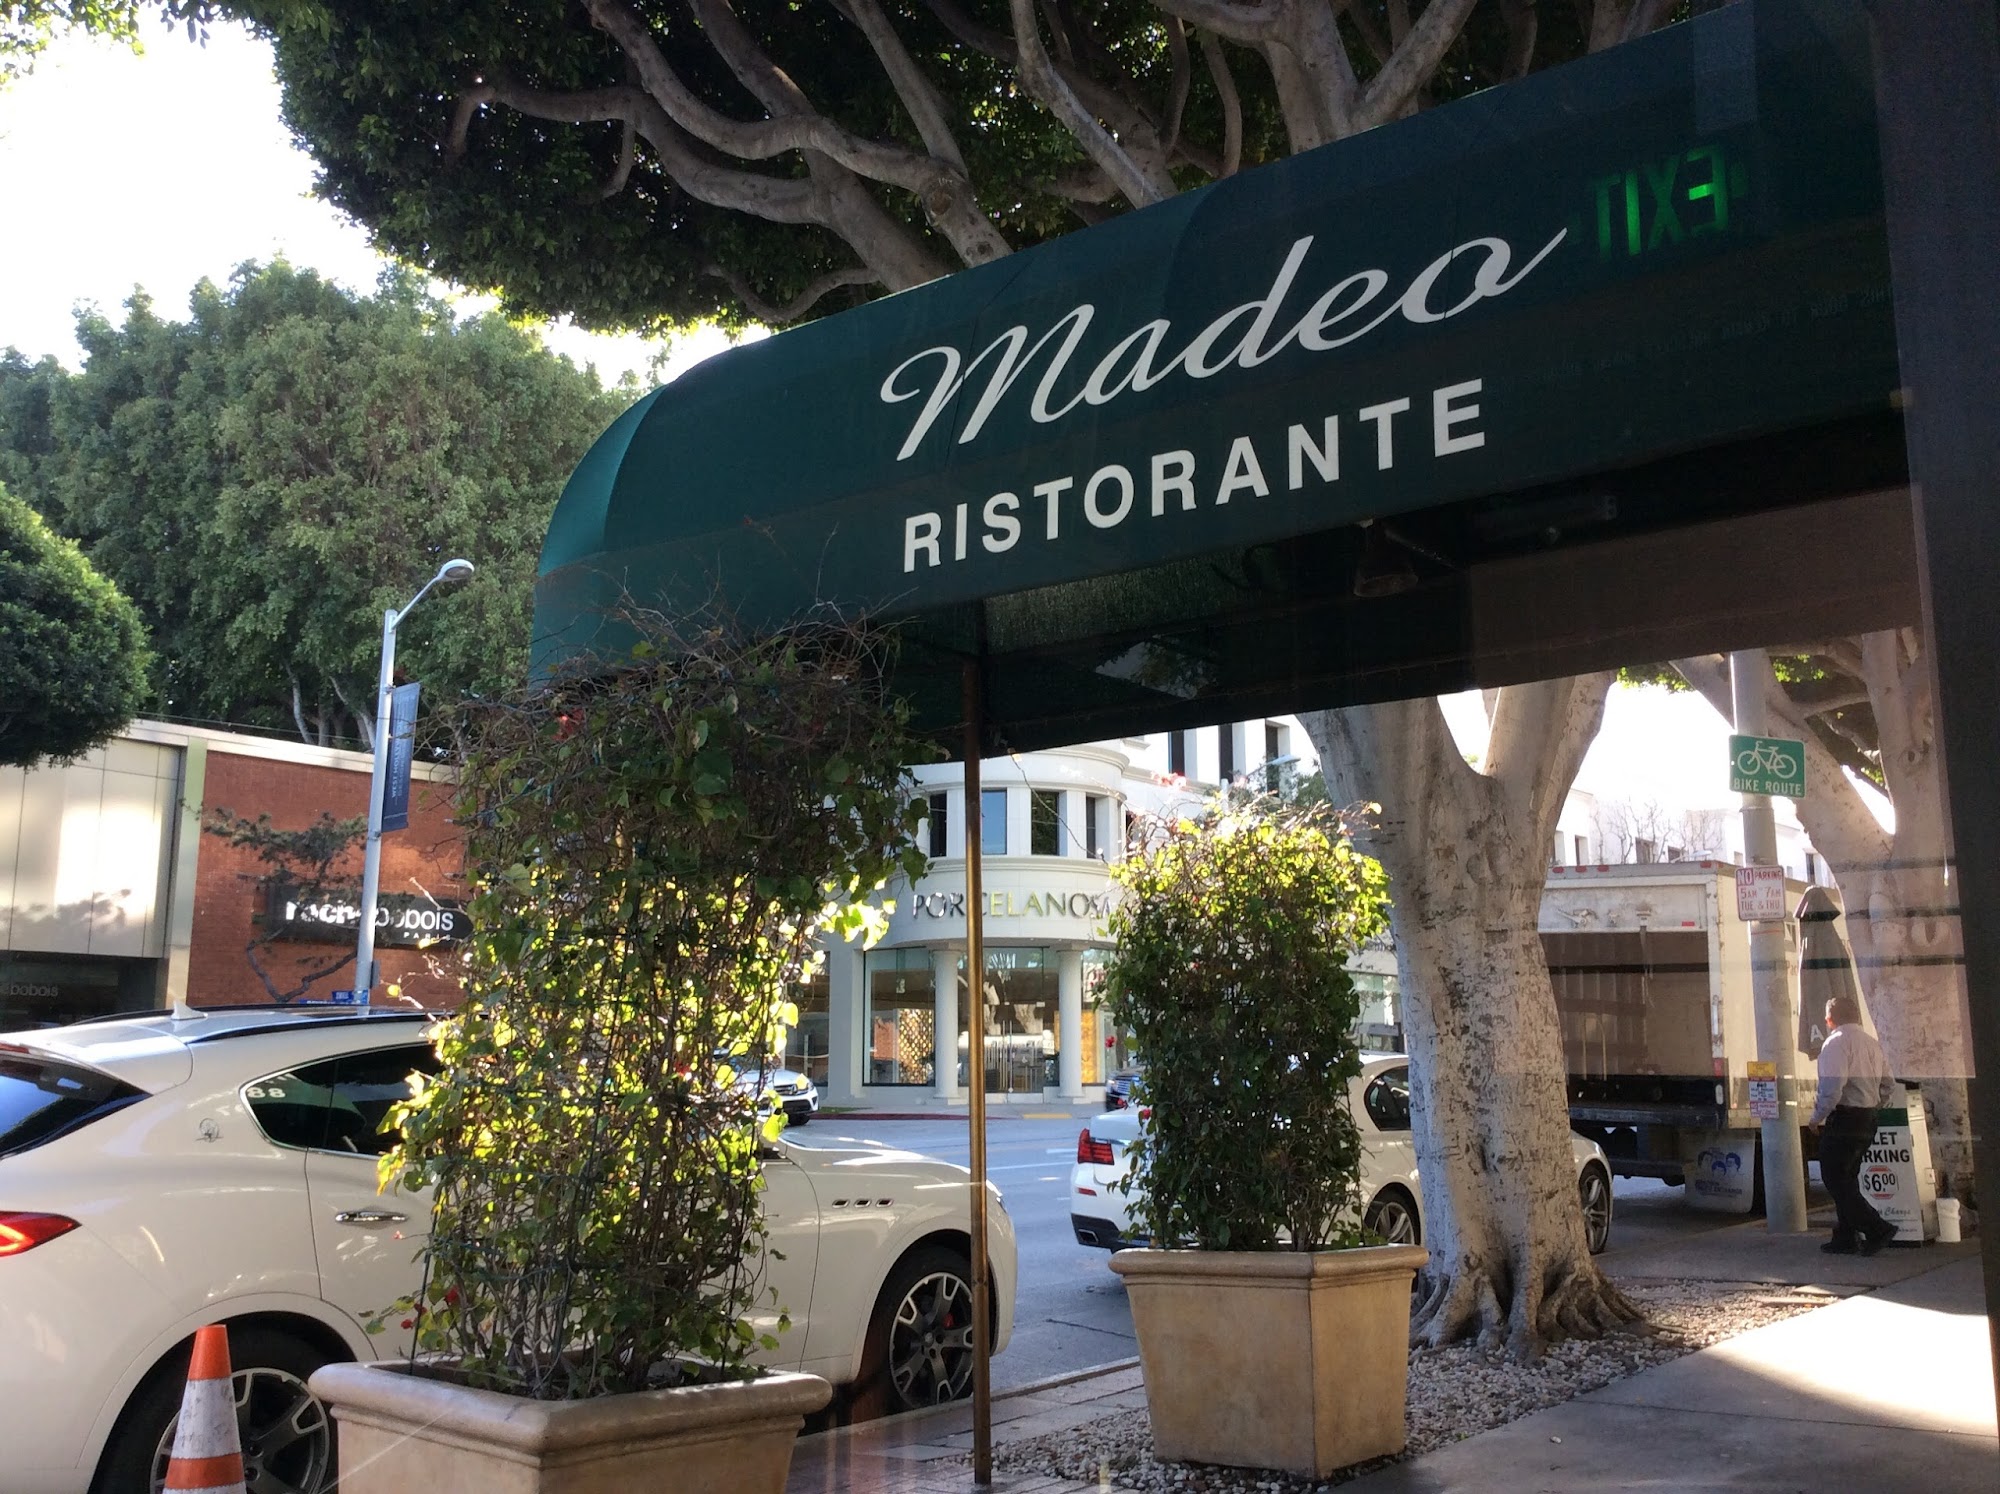 Madeo Restaurant